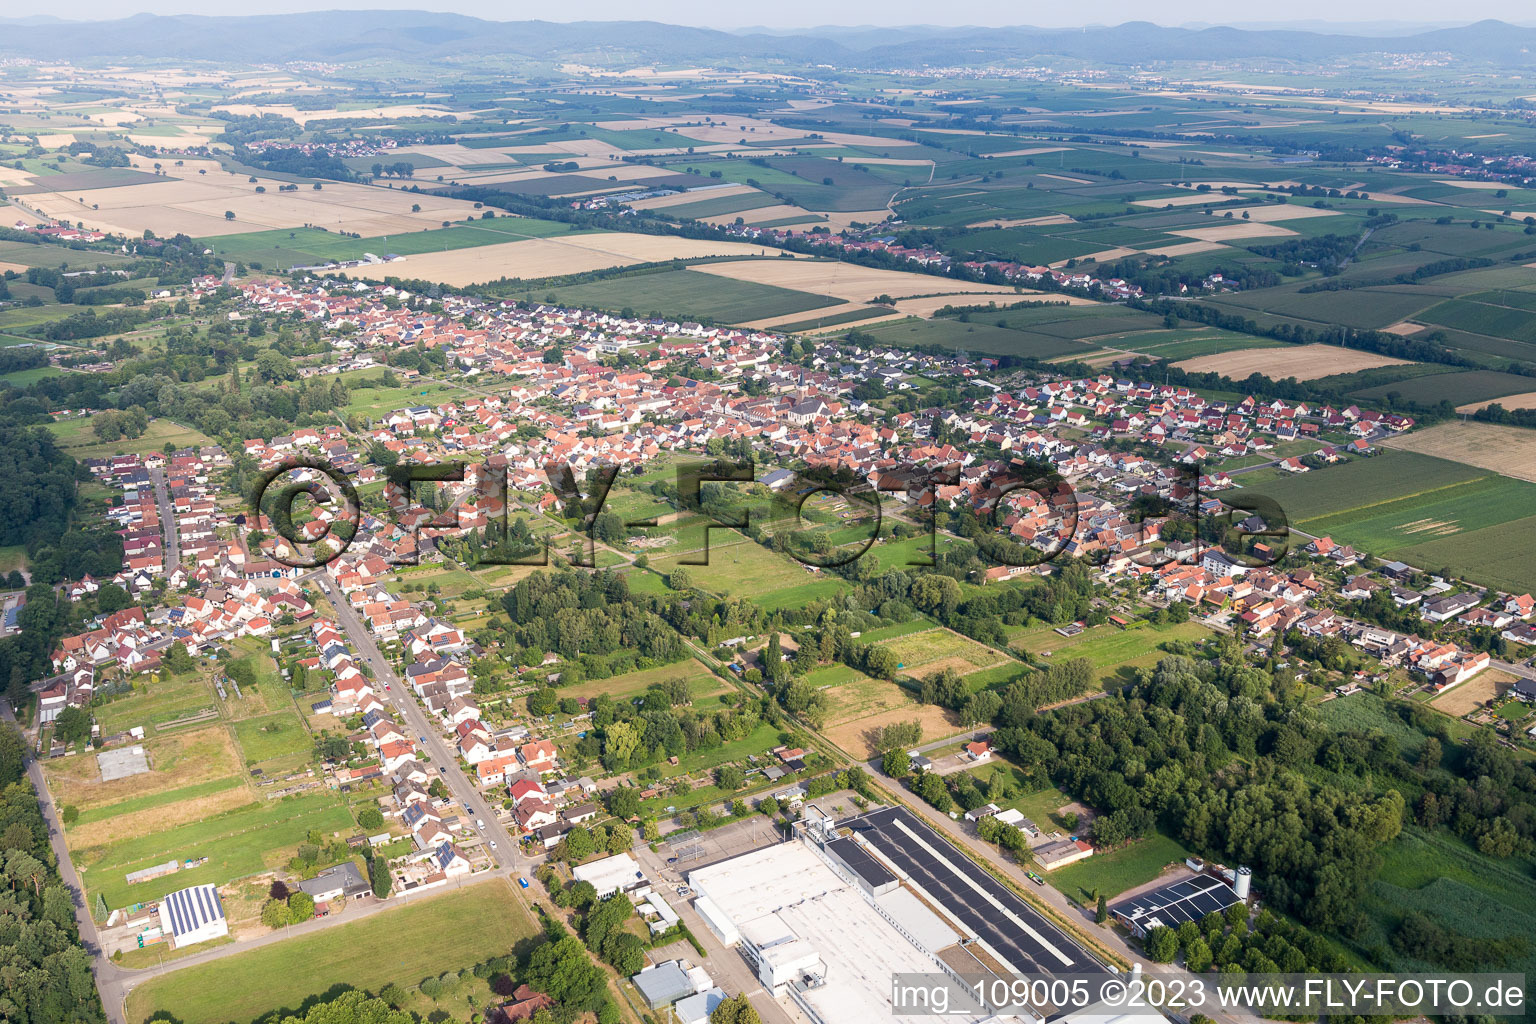 District Schaidt in Wörth am Rhein in the state Rhineland-Palatinate, Germany viewn from the air